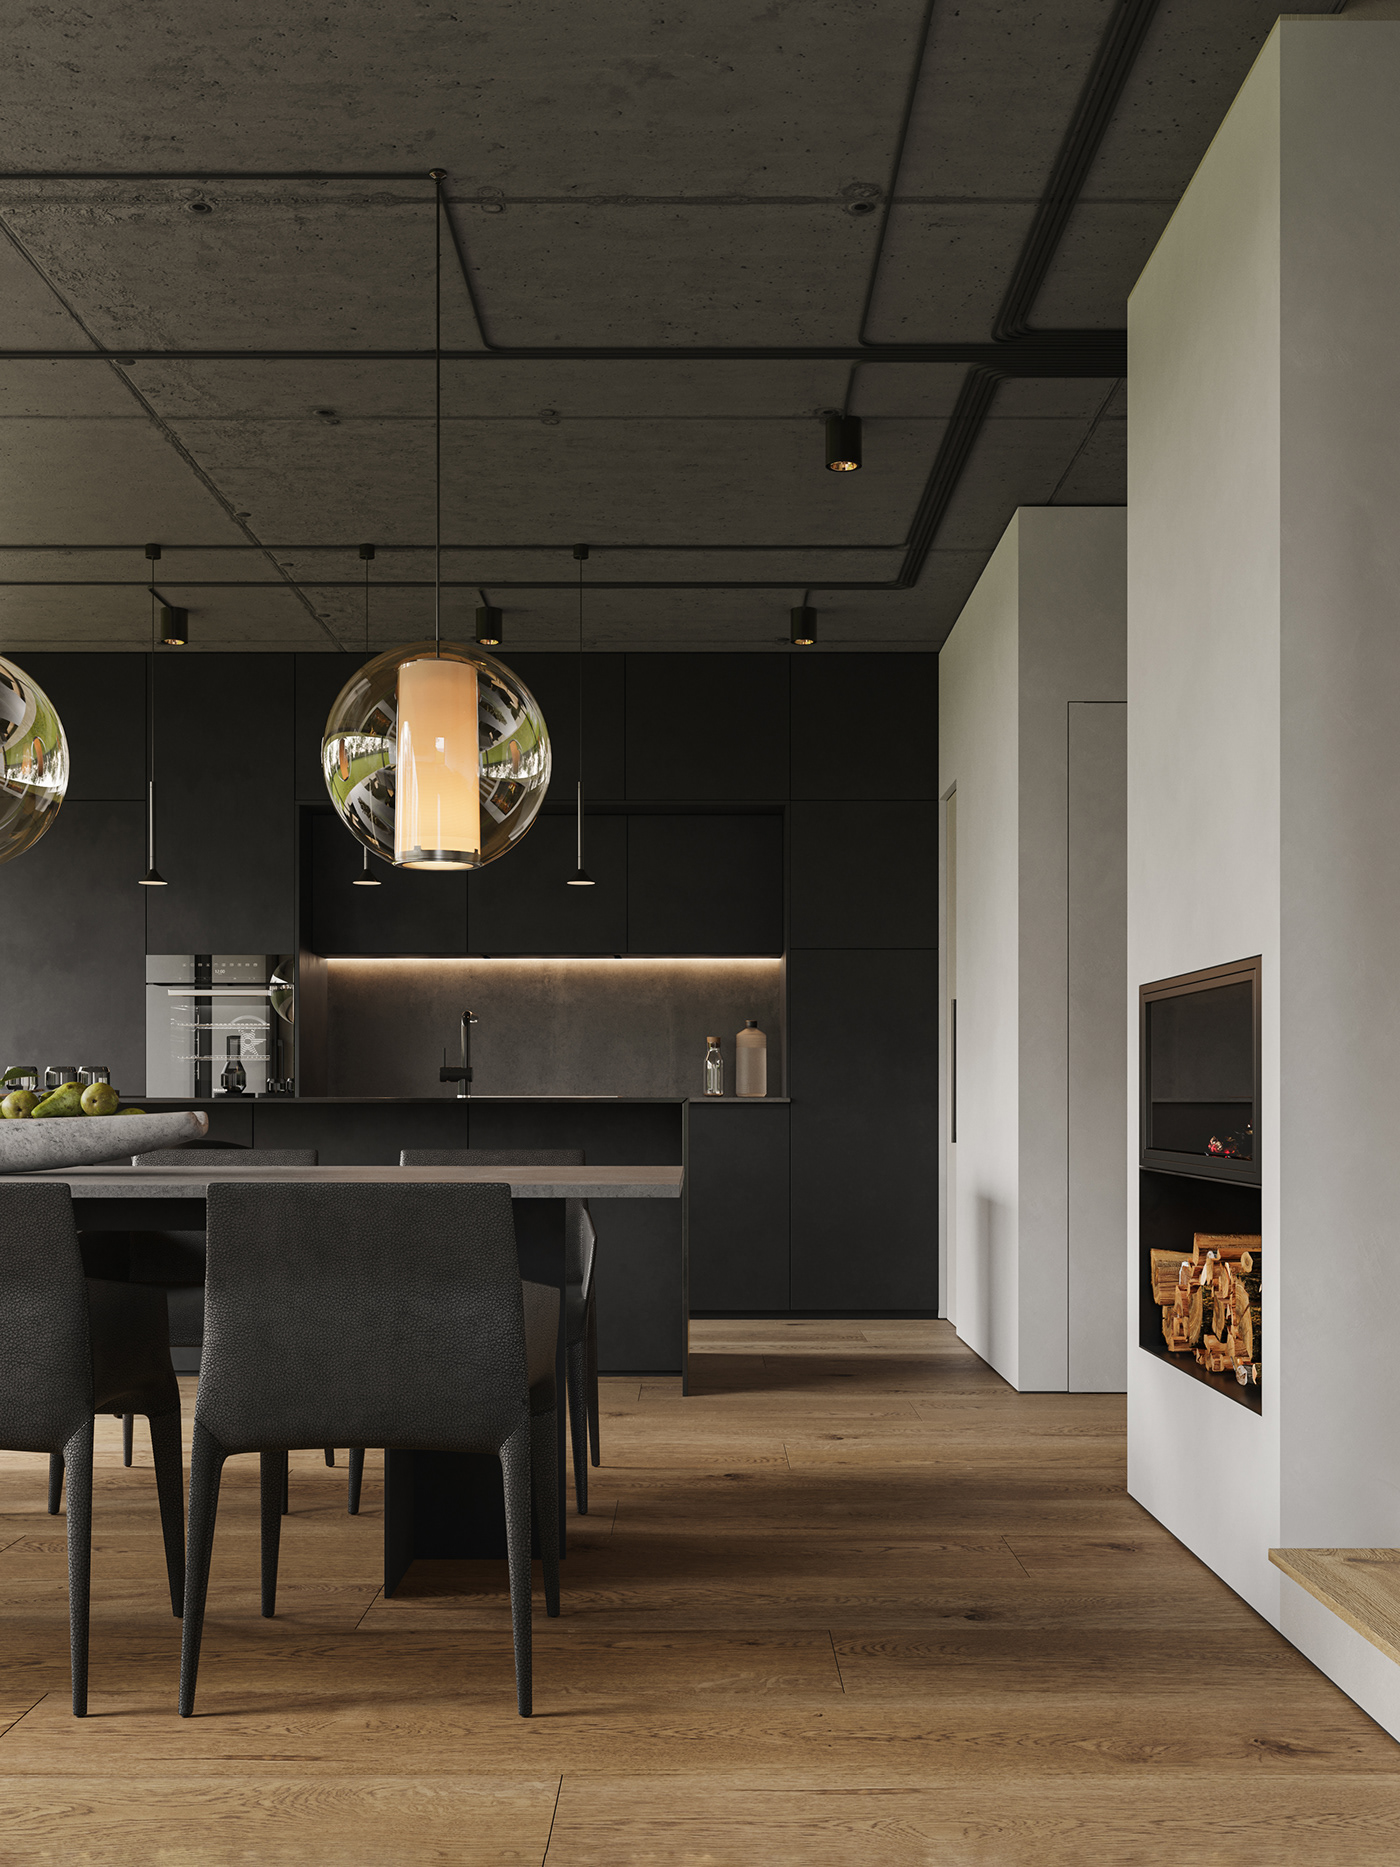 3ds max 3dsmax corona corona render  Render interior design  design living room kitchen photoshop